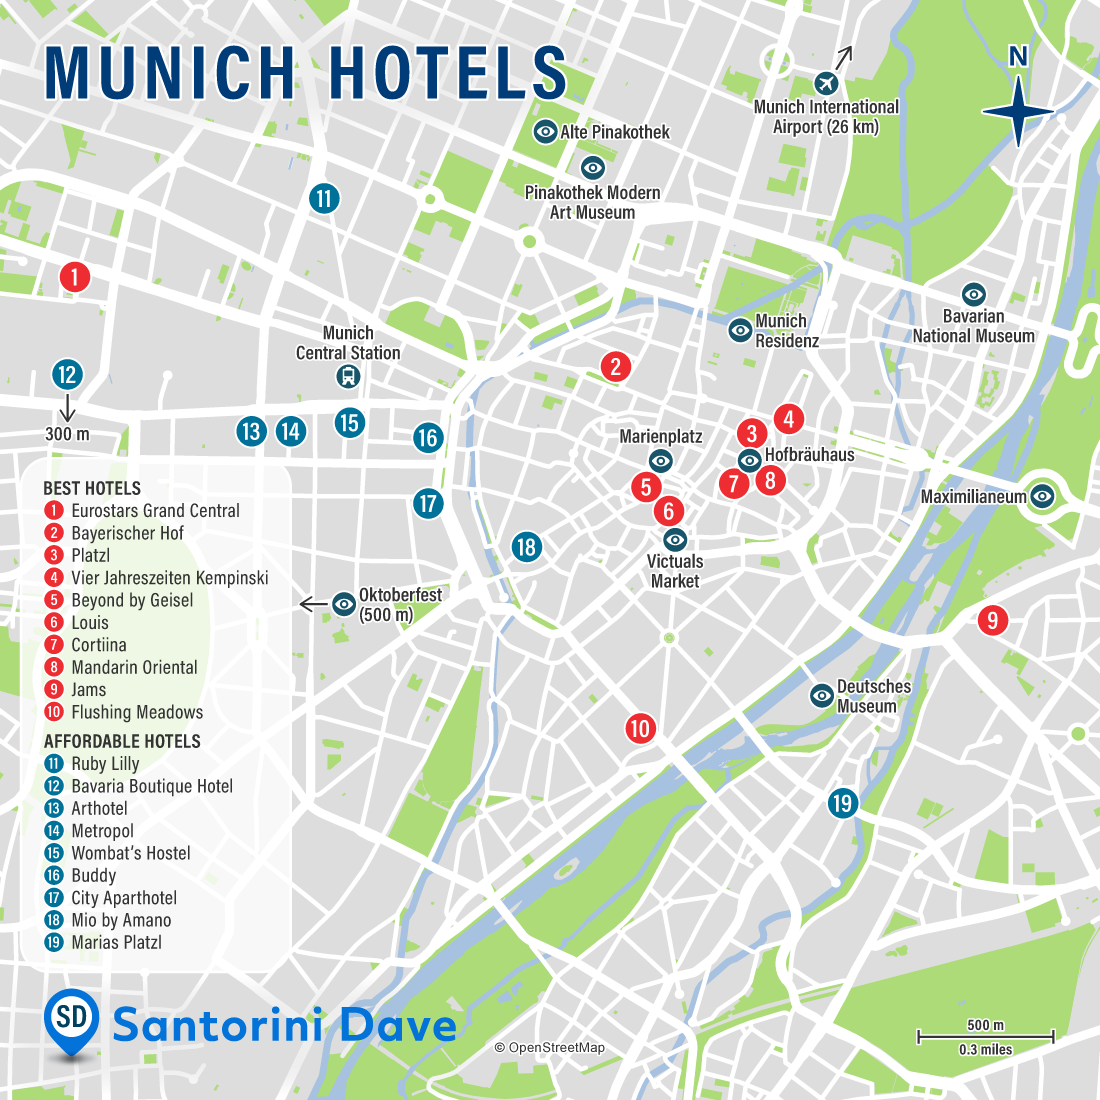 Map of Munich Hotels and Neighborhoods